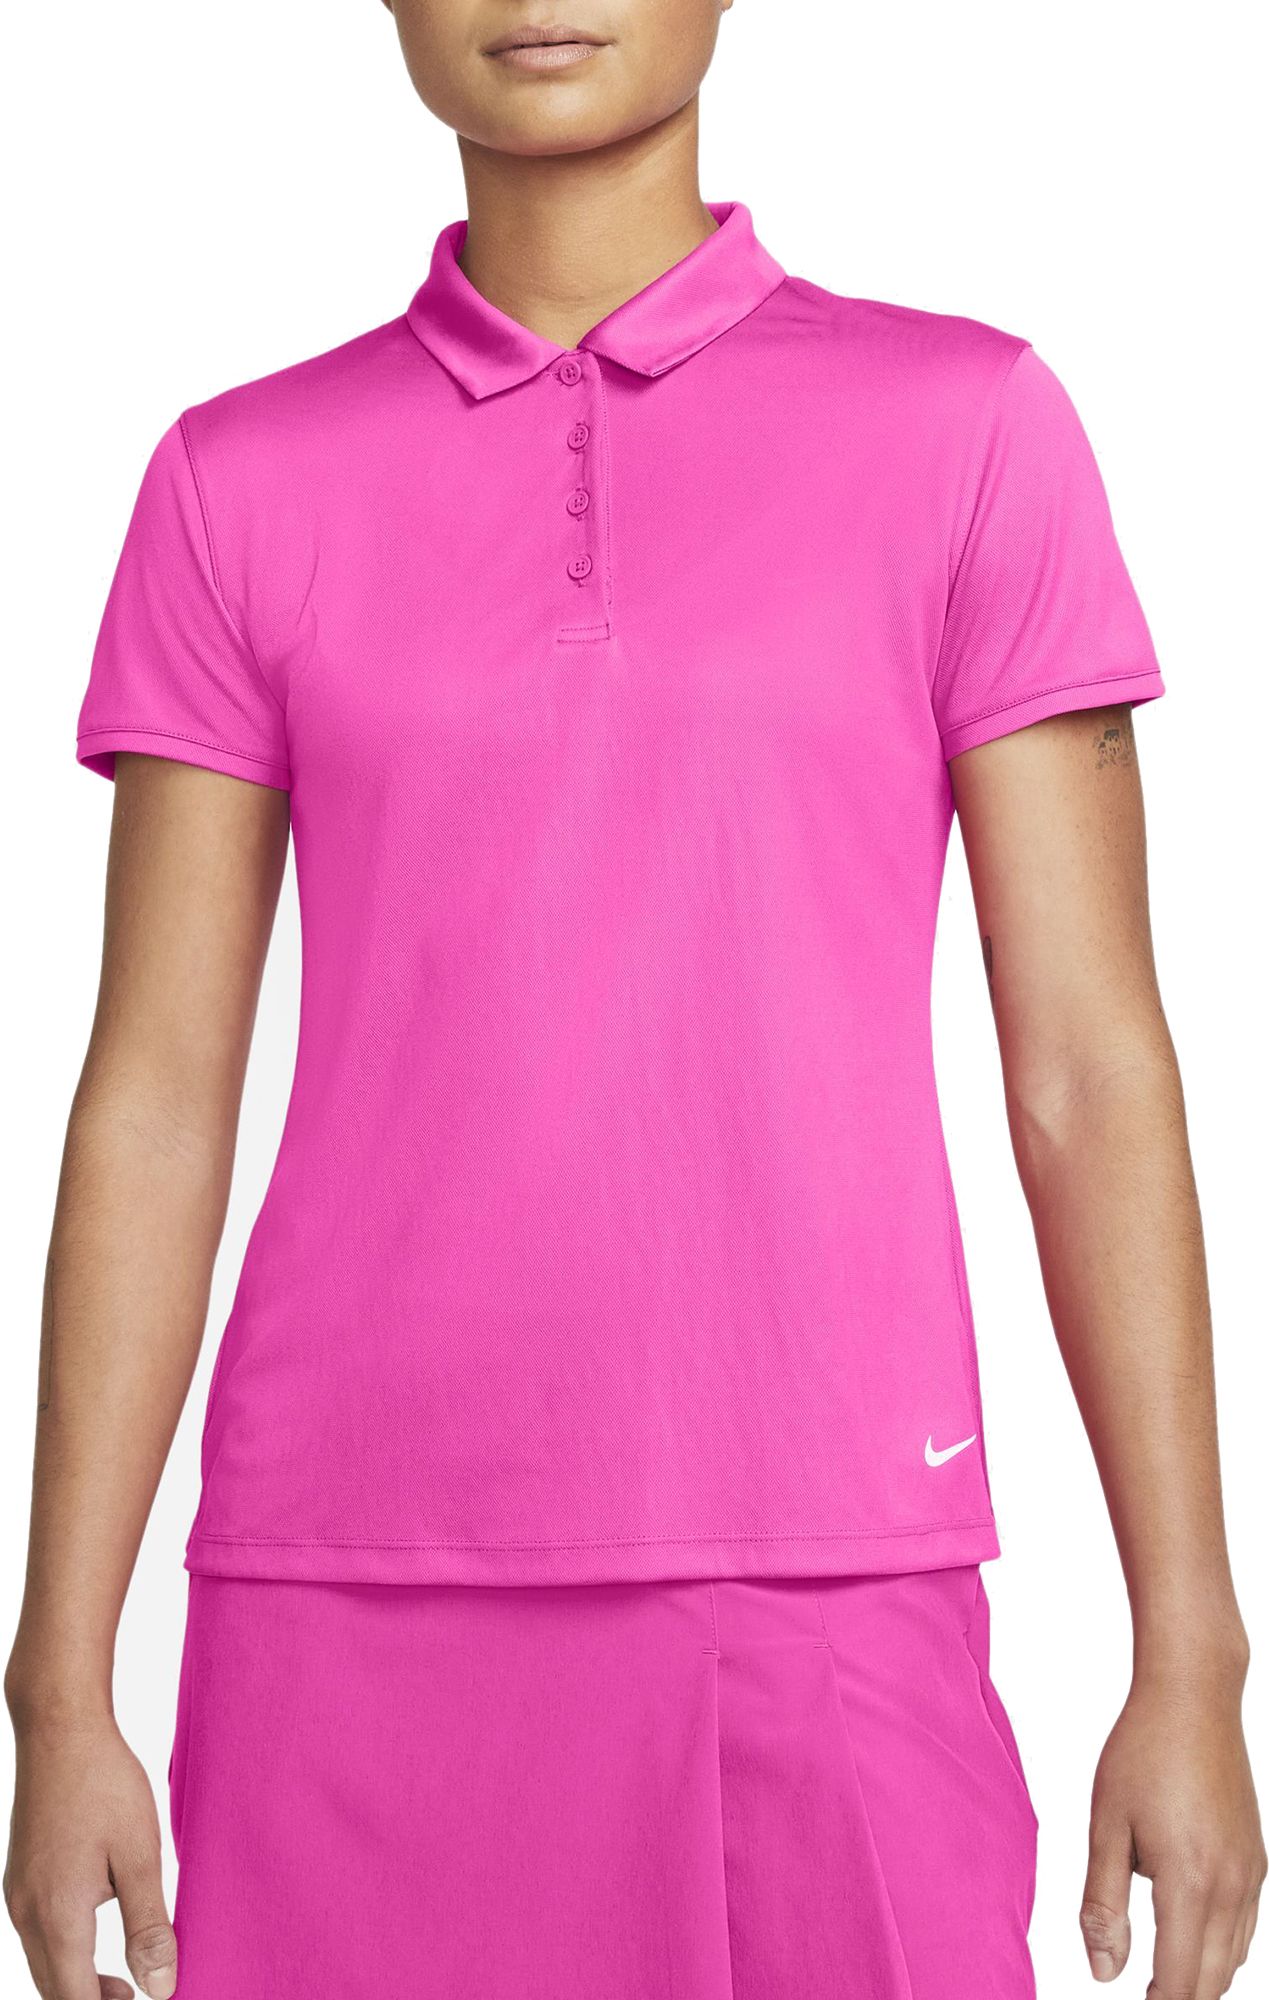 nike women's fairway short sleeve golf polo top